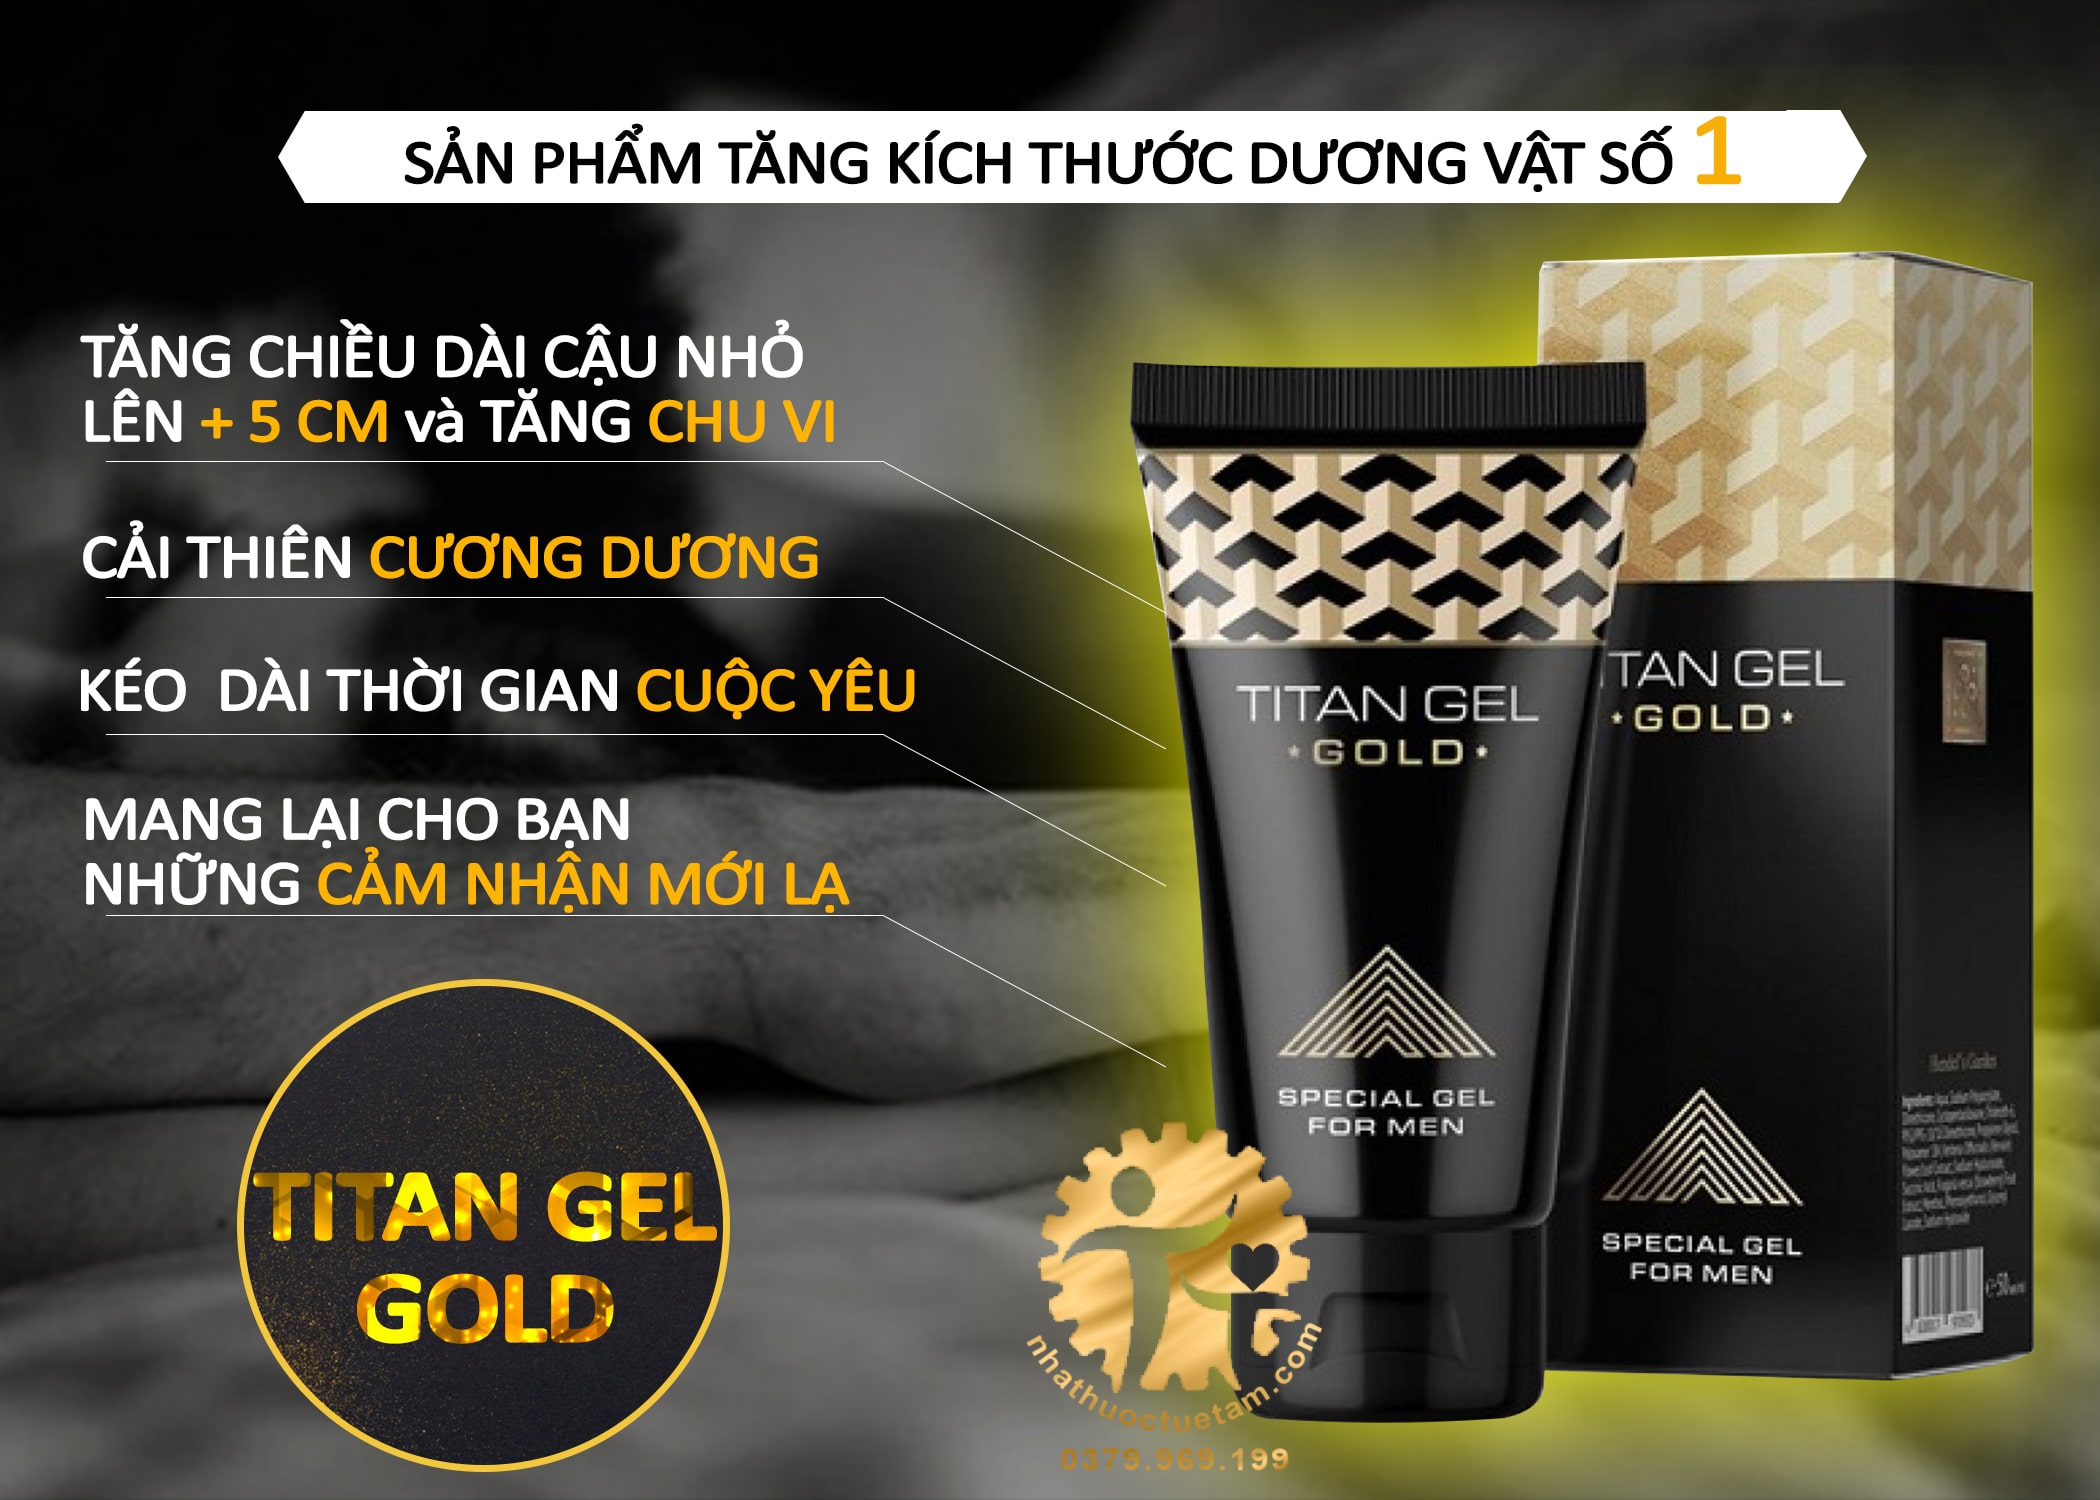 Gel Titan gold